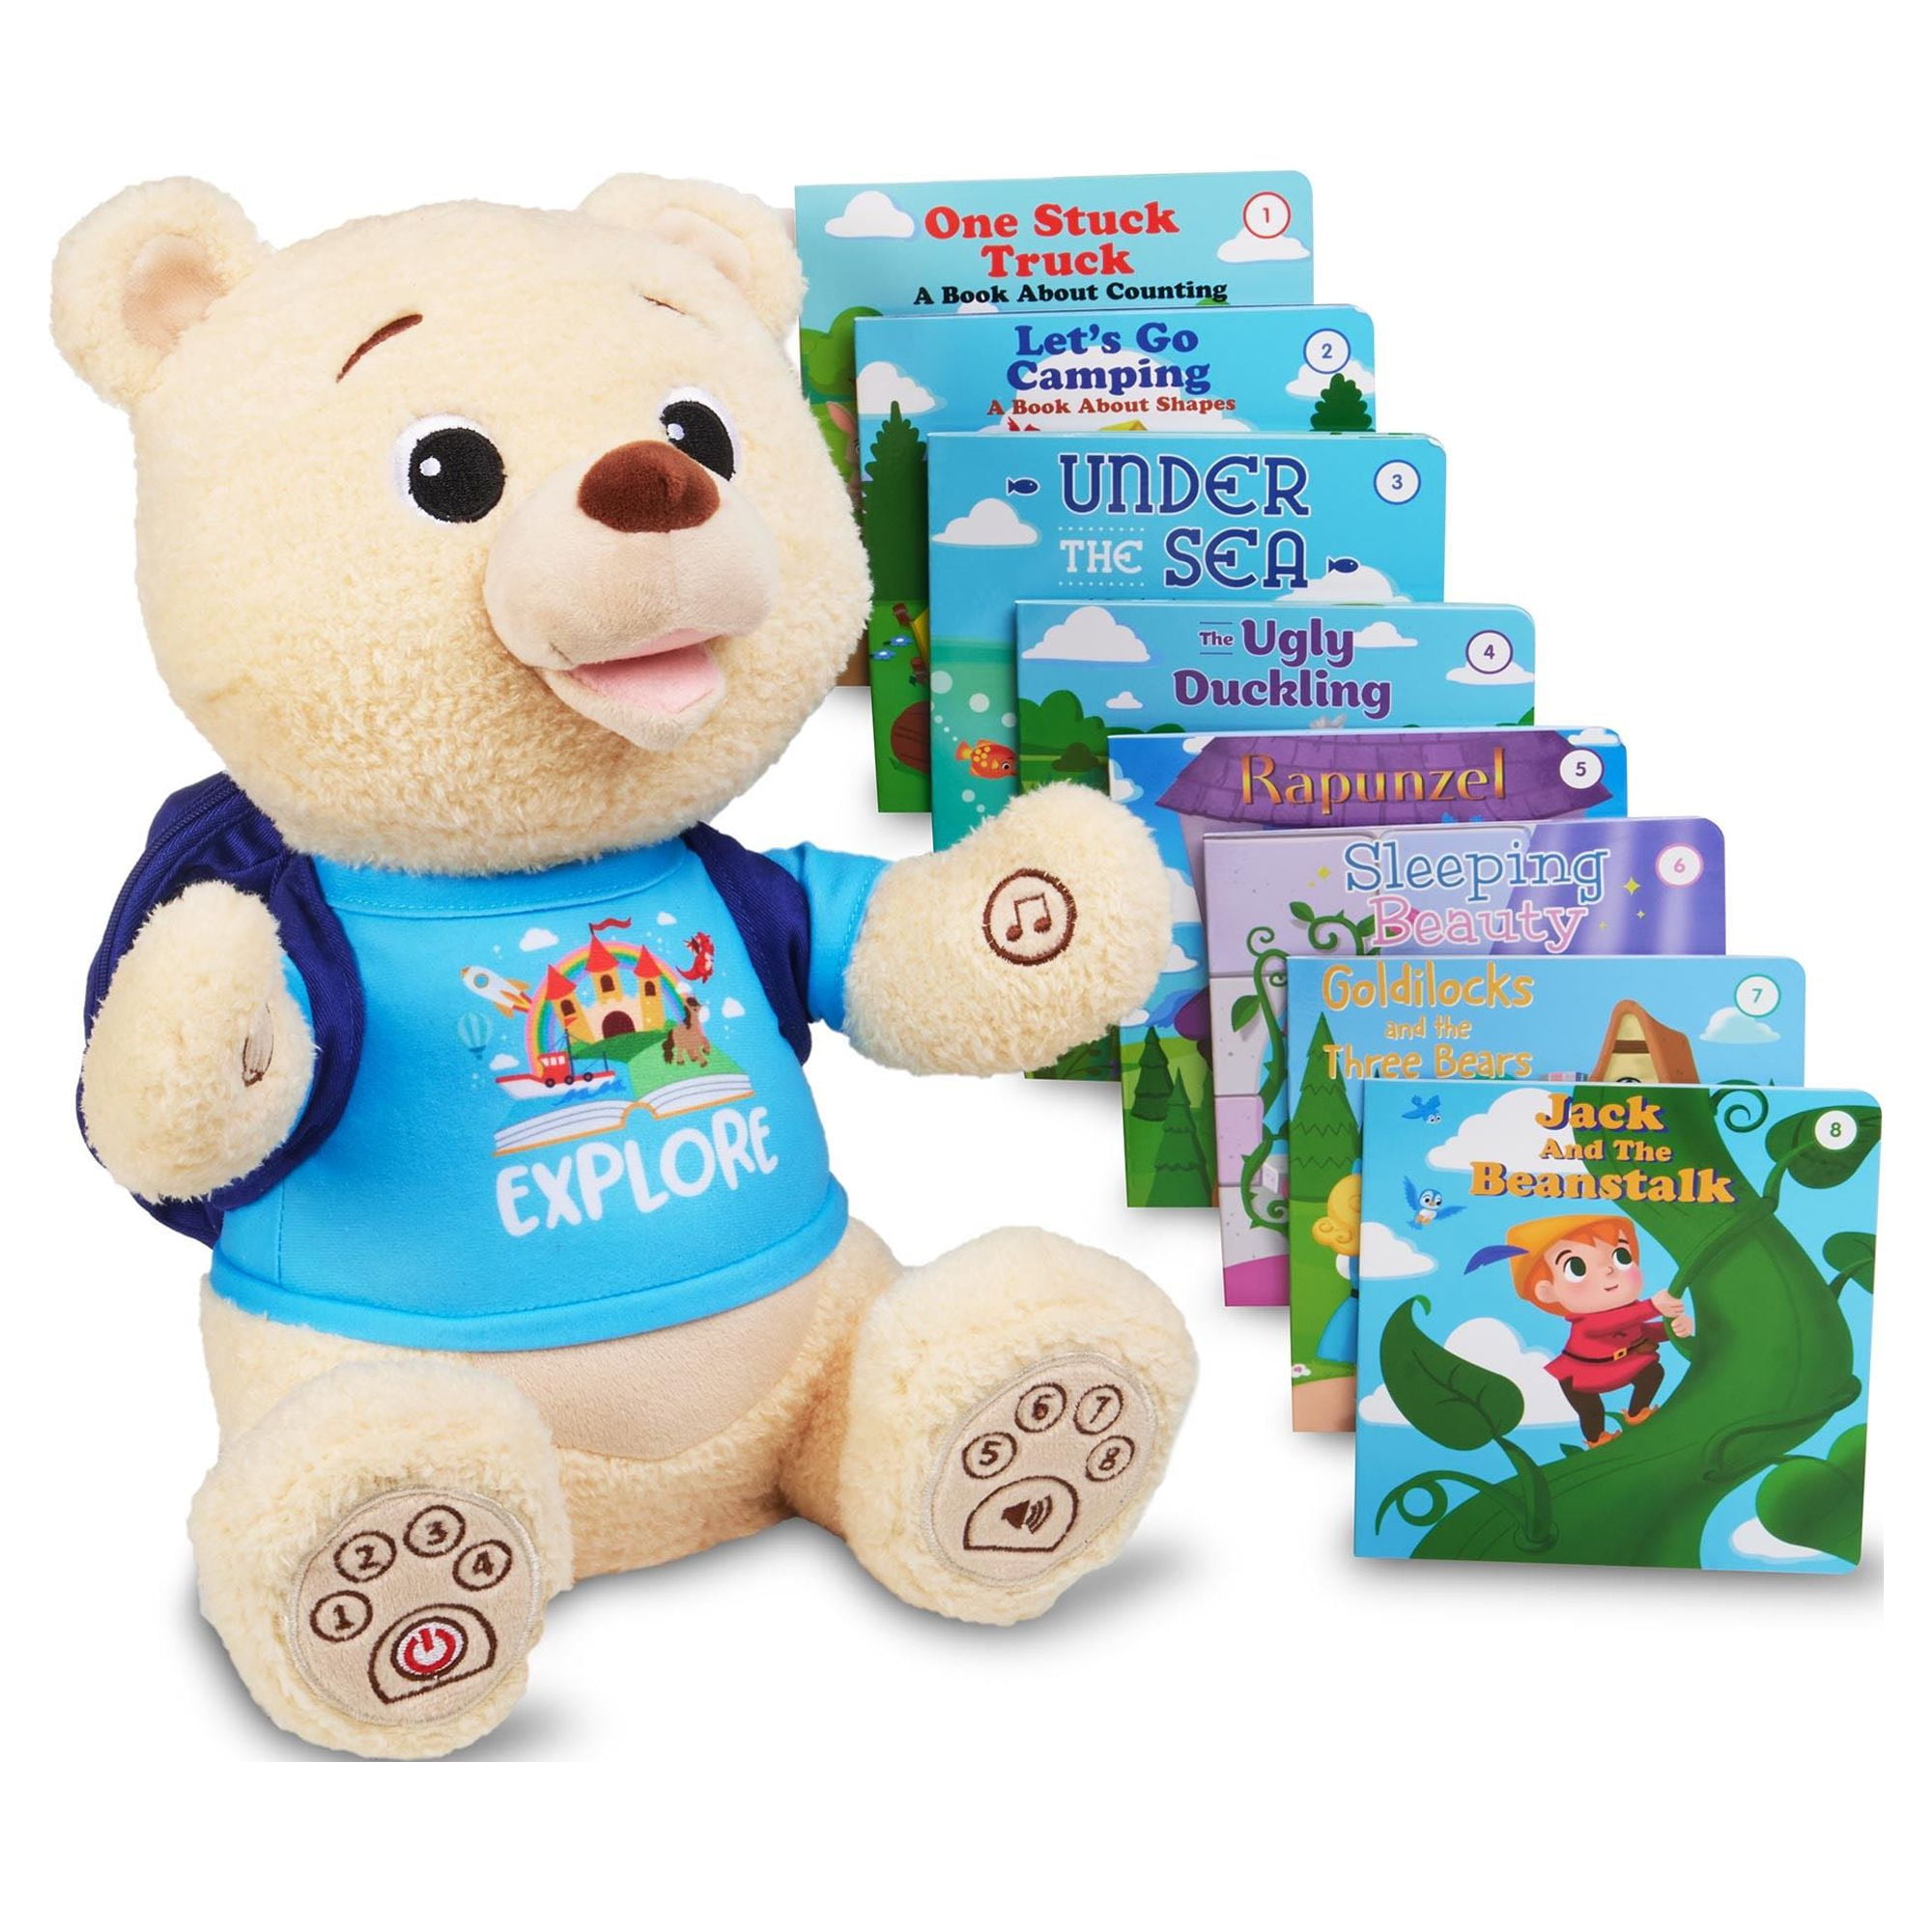 Personalised Get Well Soon Card Teddy Bear cute Rainbow 